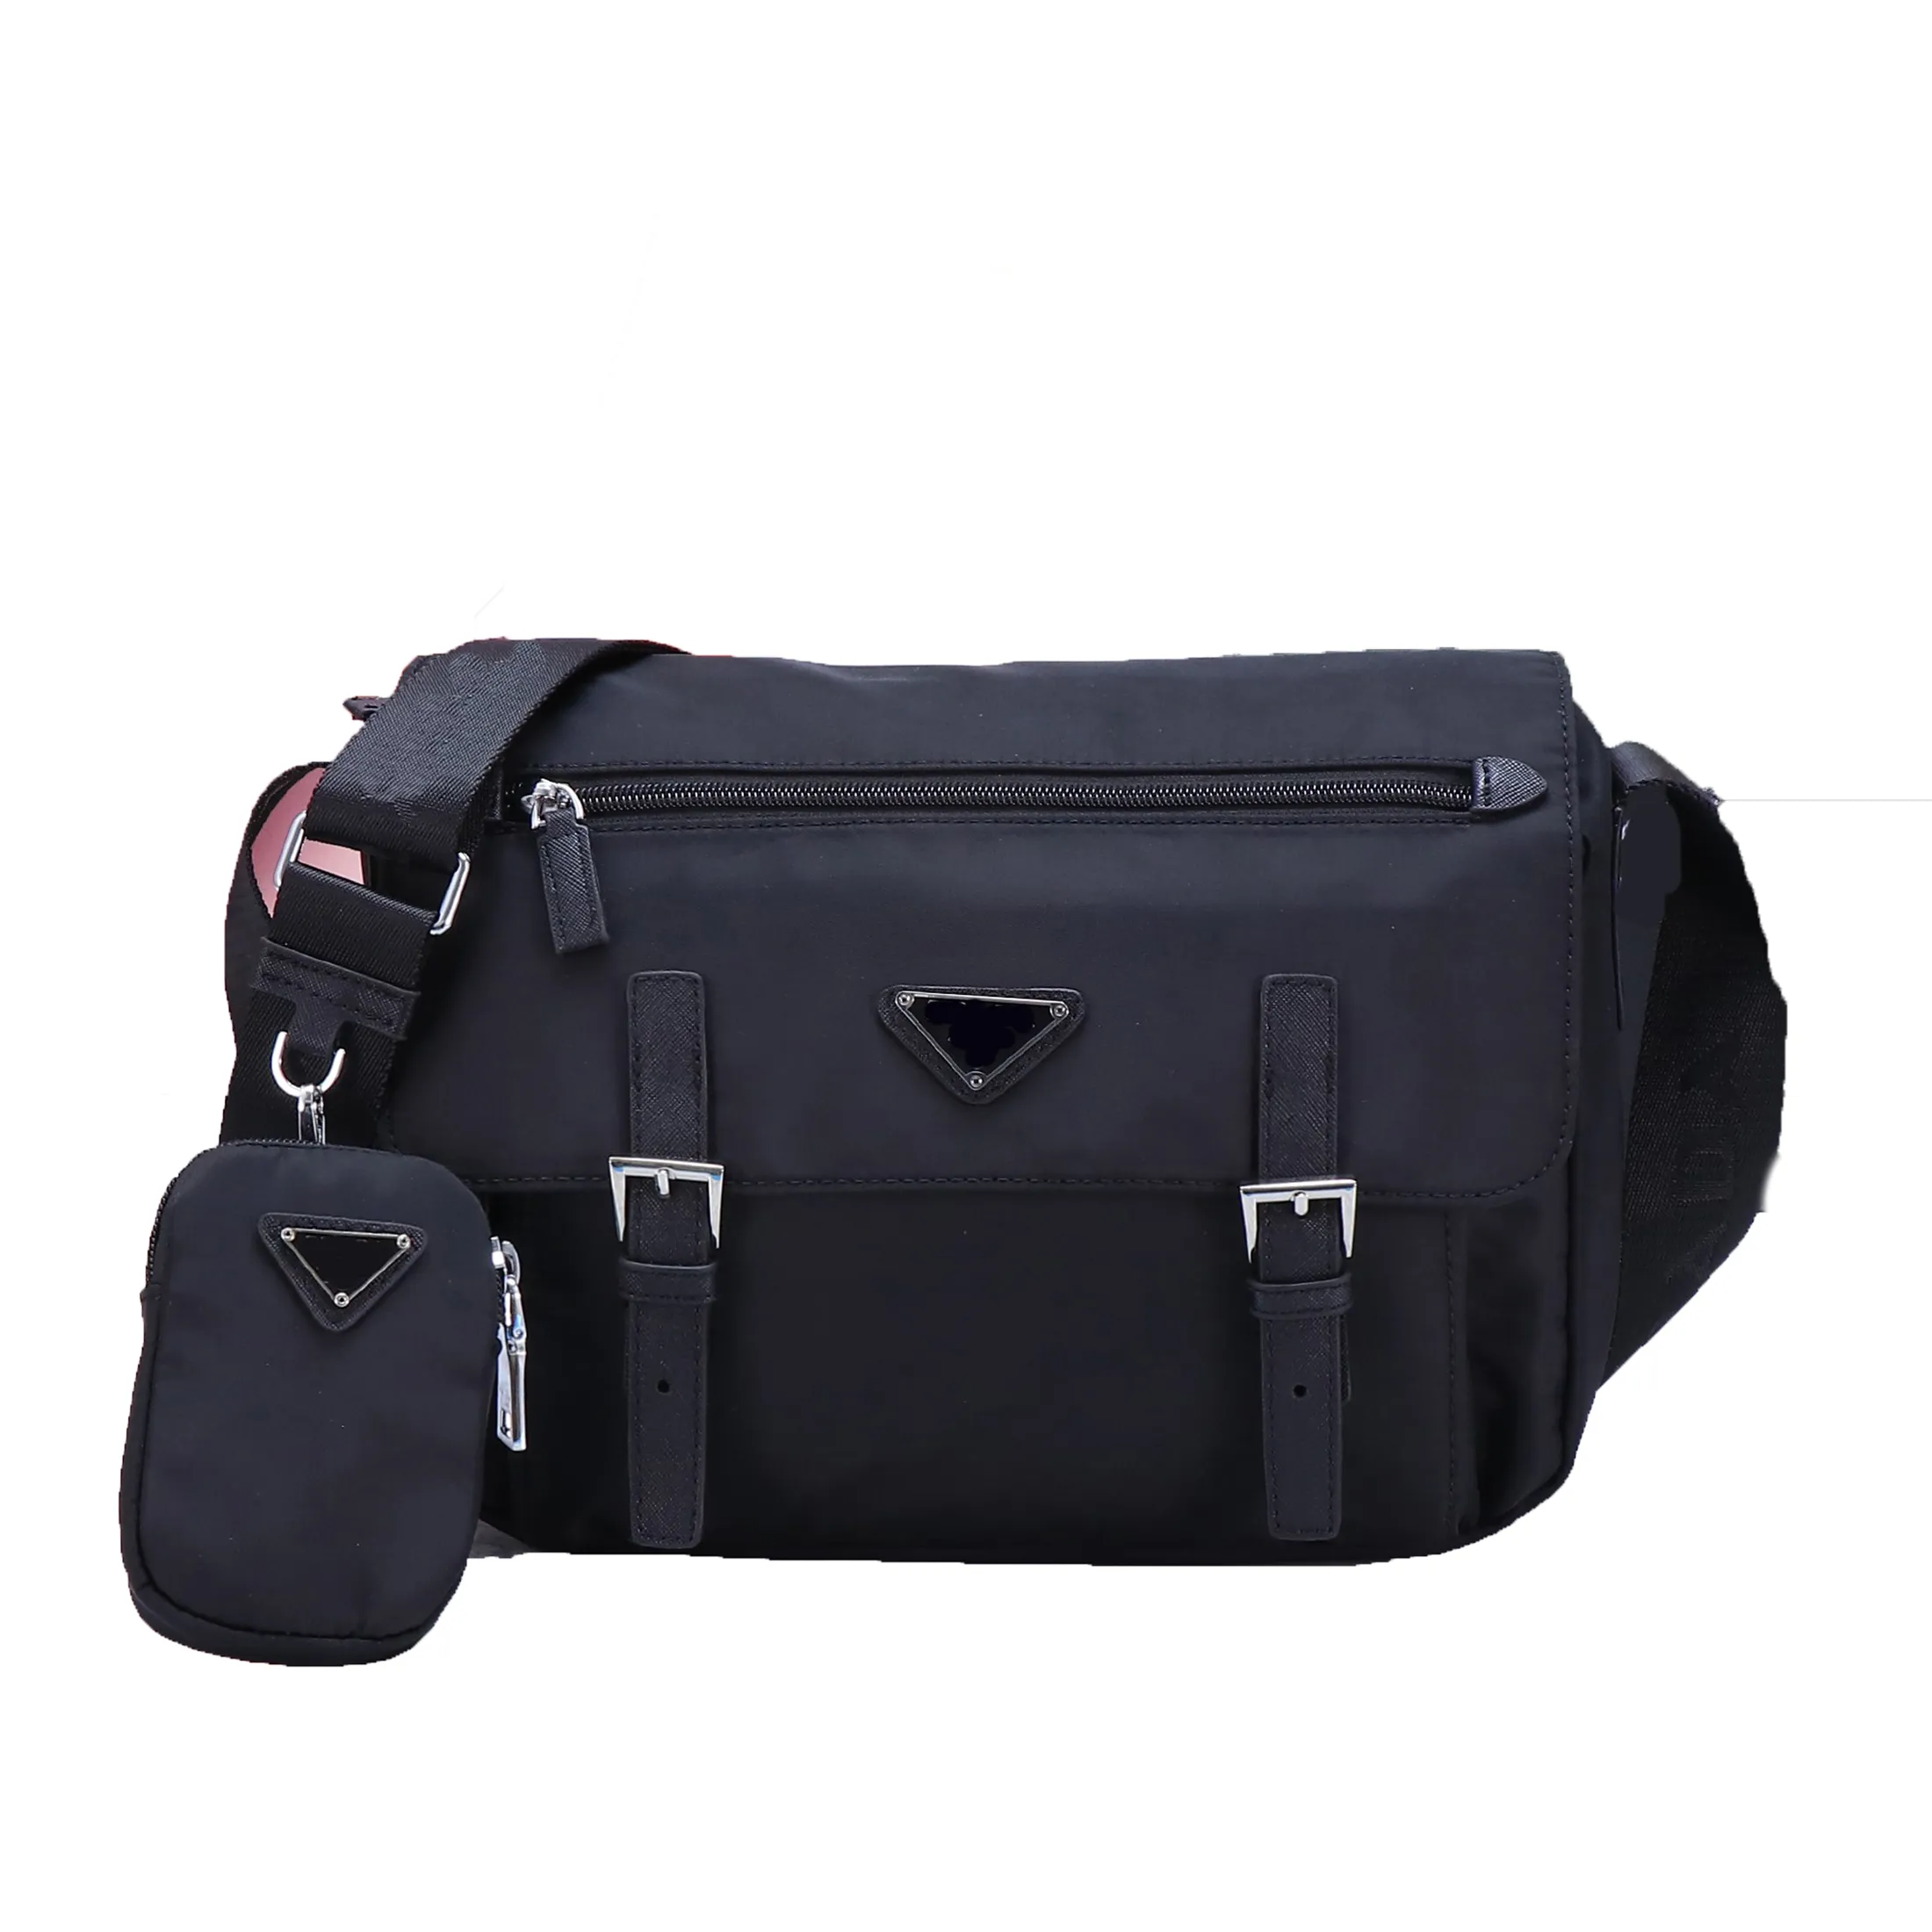 Handbags Shoulder Bag Quality Underarm package Genuine Leather Crossbody Hobo Bags Fashion Lady Purses Wholesale Pouch Purse Men Messenger Bags